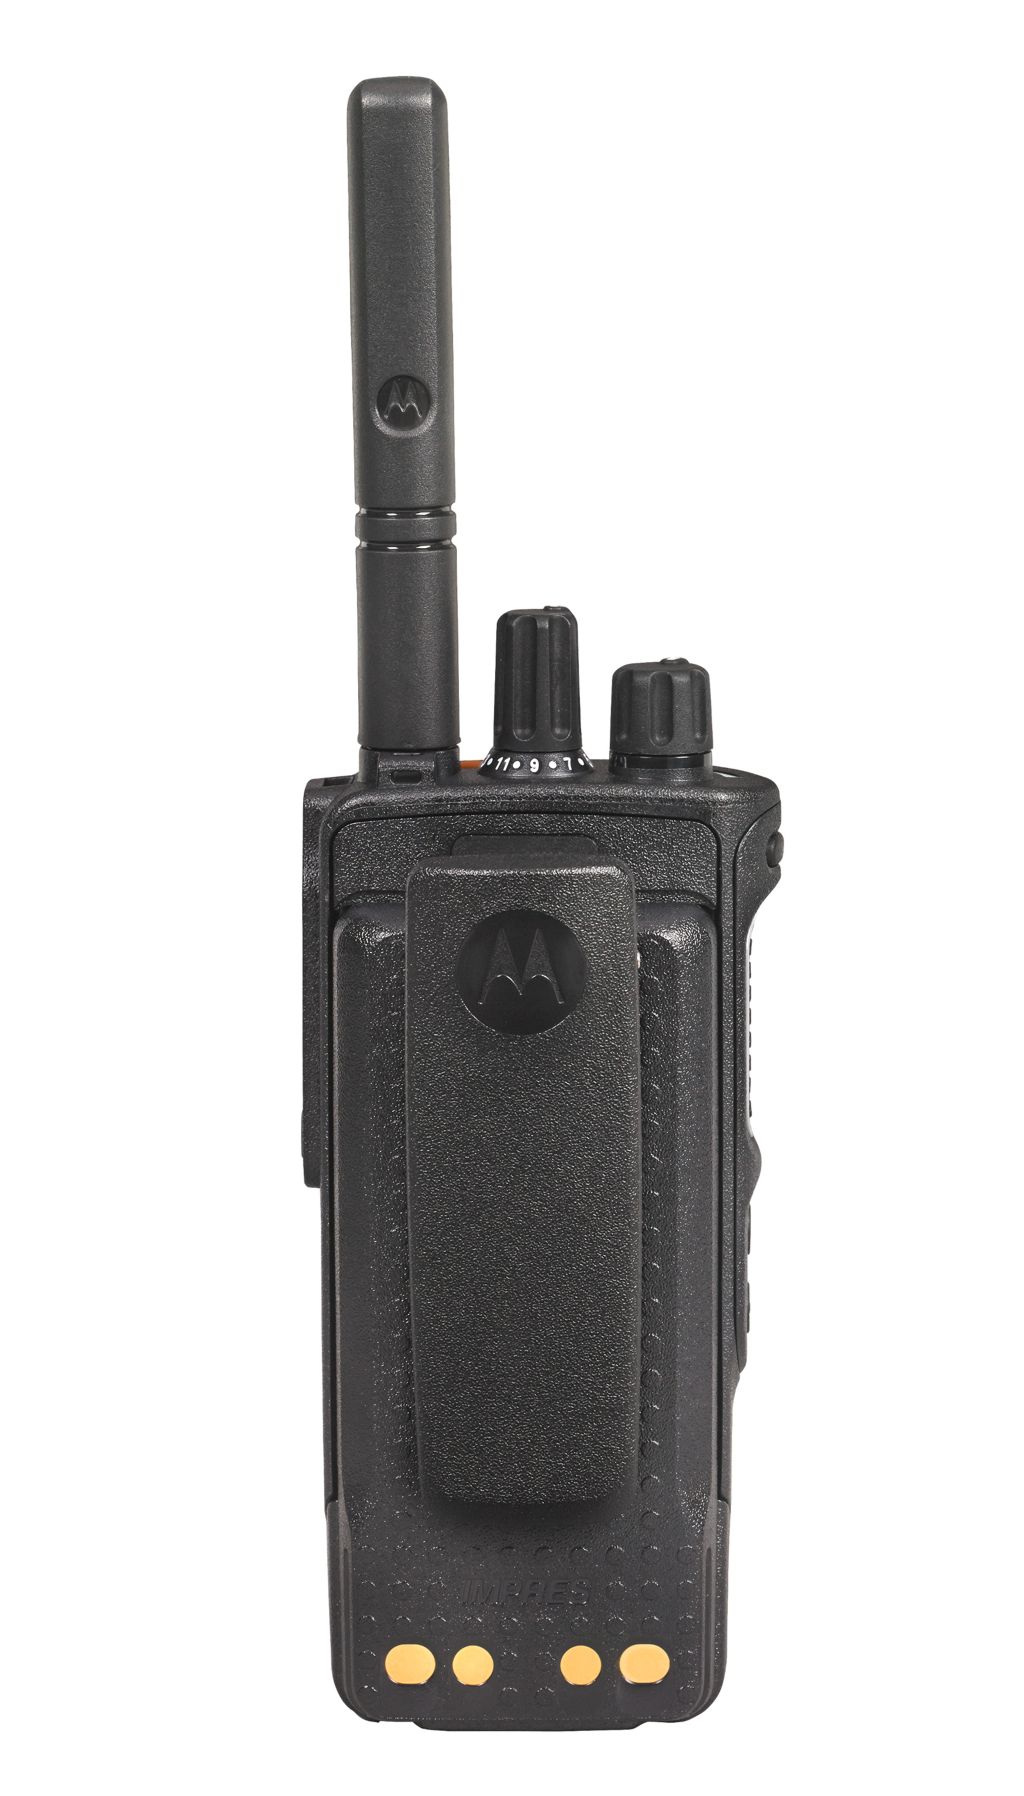 Motorola MOTOTRBO DP4400e VHF 136-174 MHz without accessories PBER302C MDH56JDC9VA1AN